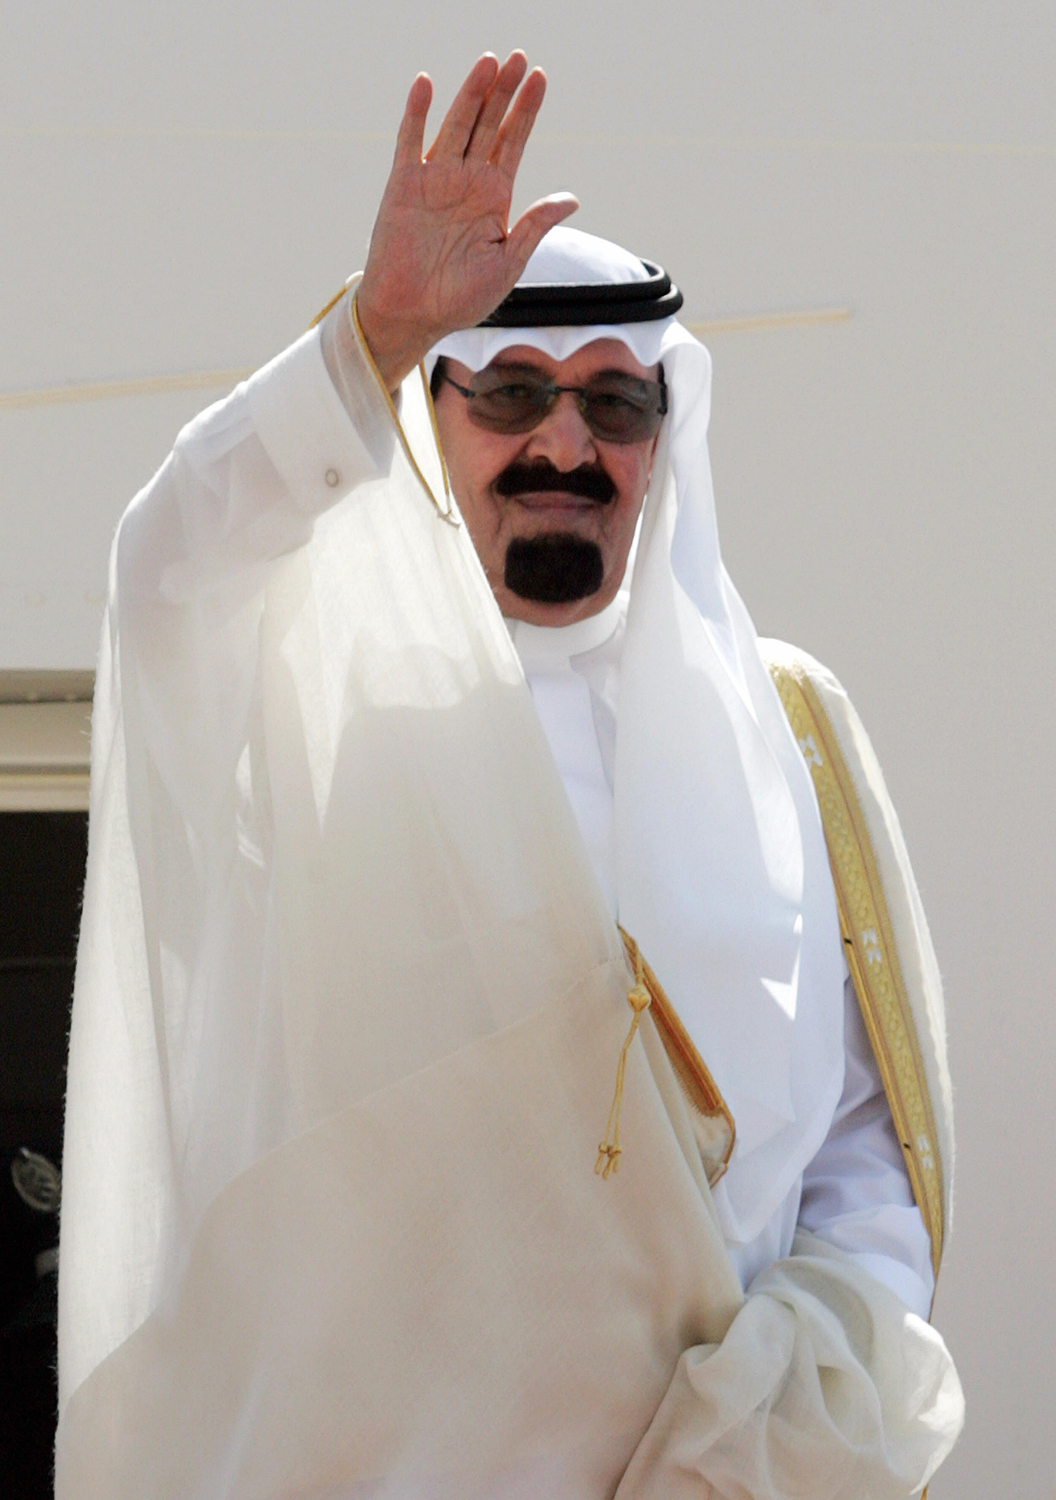 Фахд ибн Абдул-Азиз. Абдалла ибн Абдул-Азиз Аль Сауд. Король Фахд в Саудовской Аравии. Принц Сауд Бин Абдалла Бин. Сауд ибн фахд аль сауд